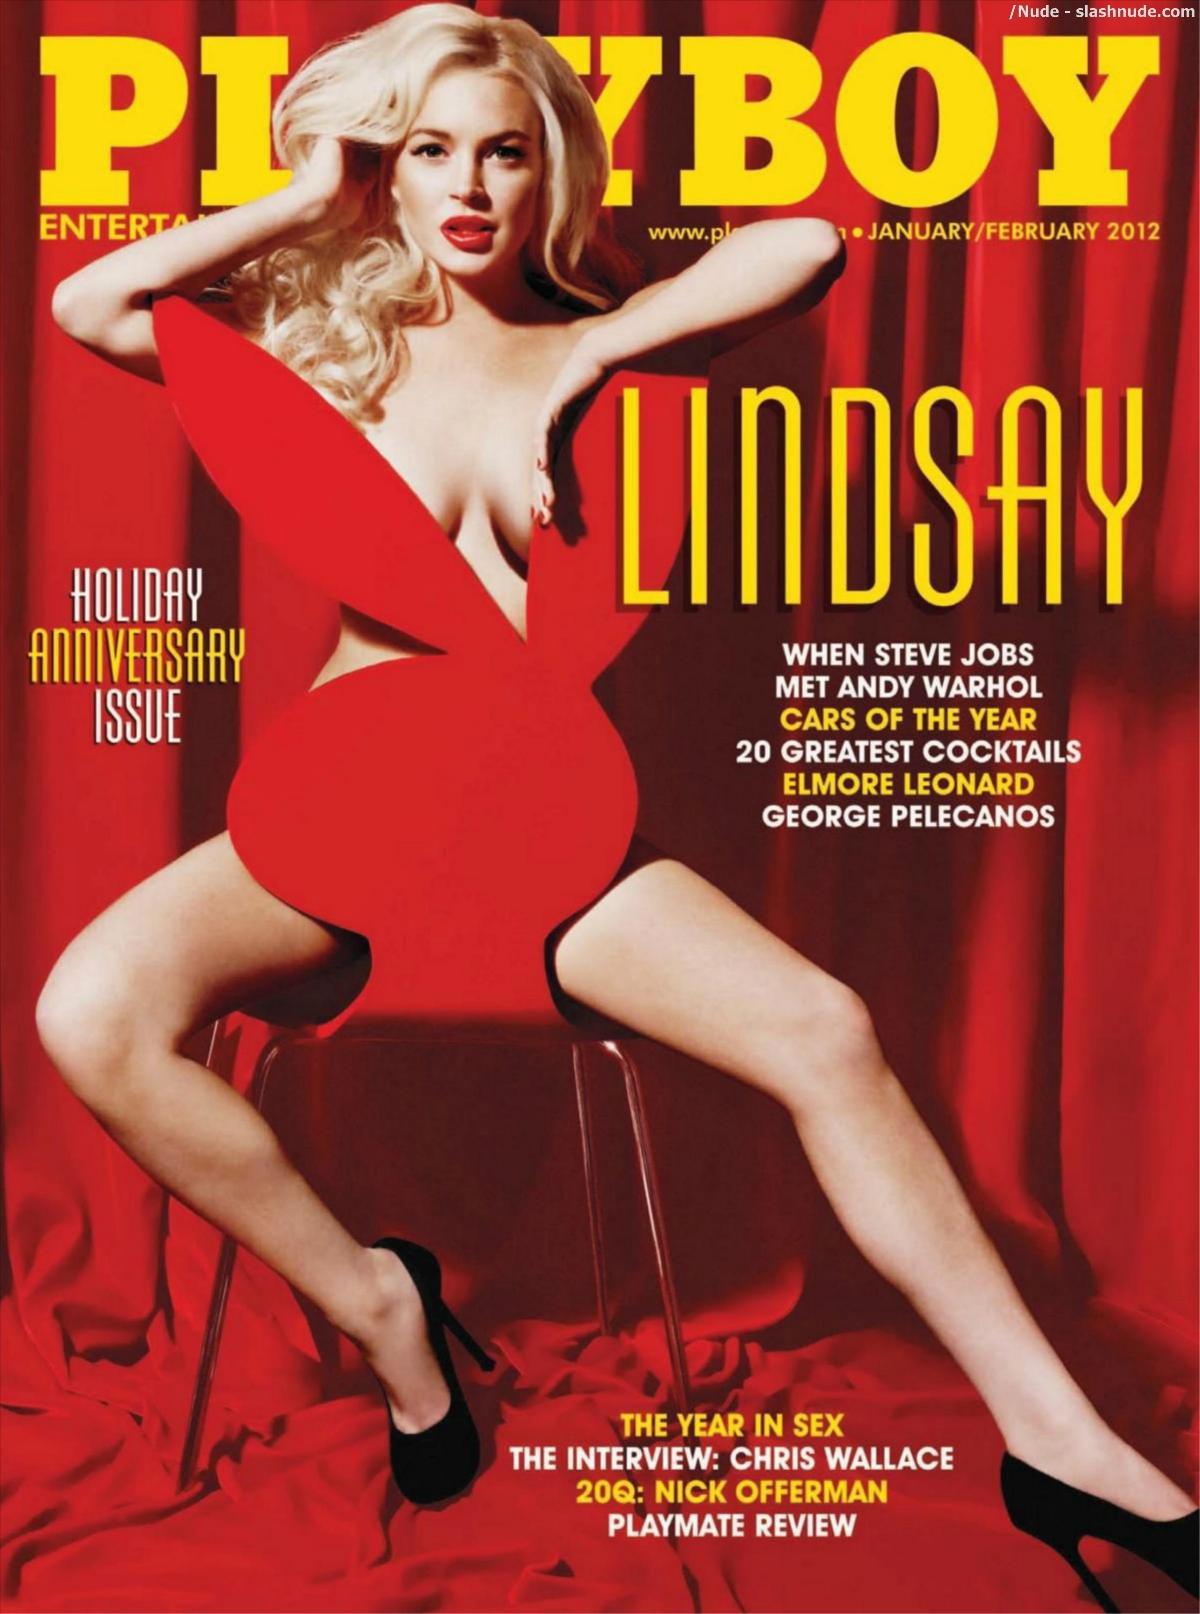 Lindsay Lohan Nude As Marilyn Monroe 1